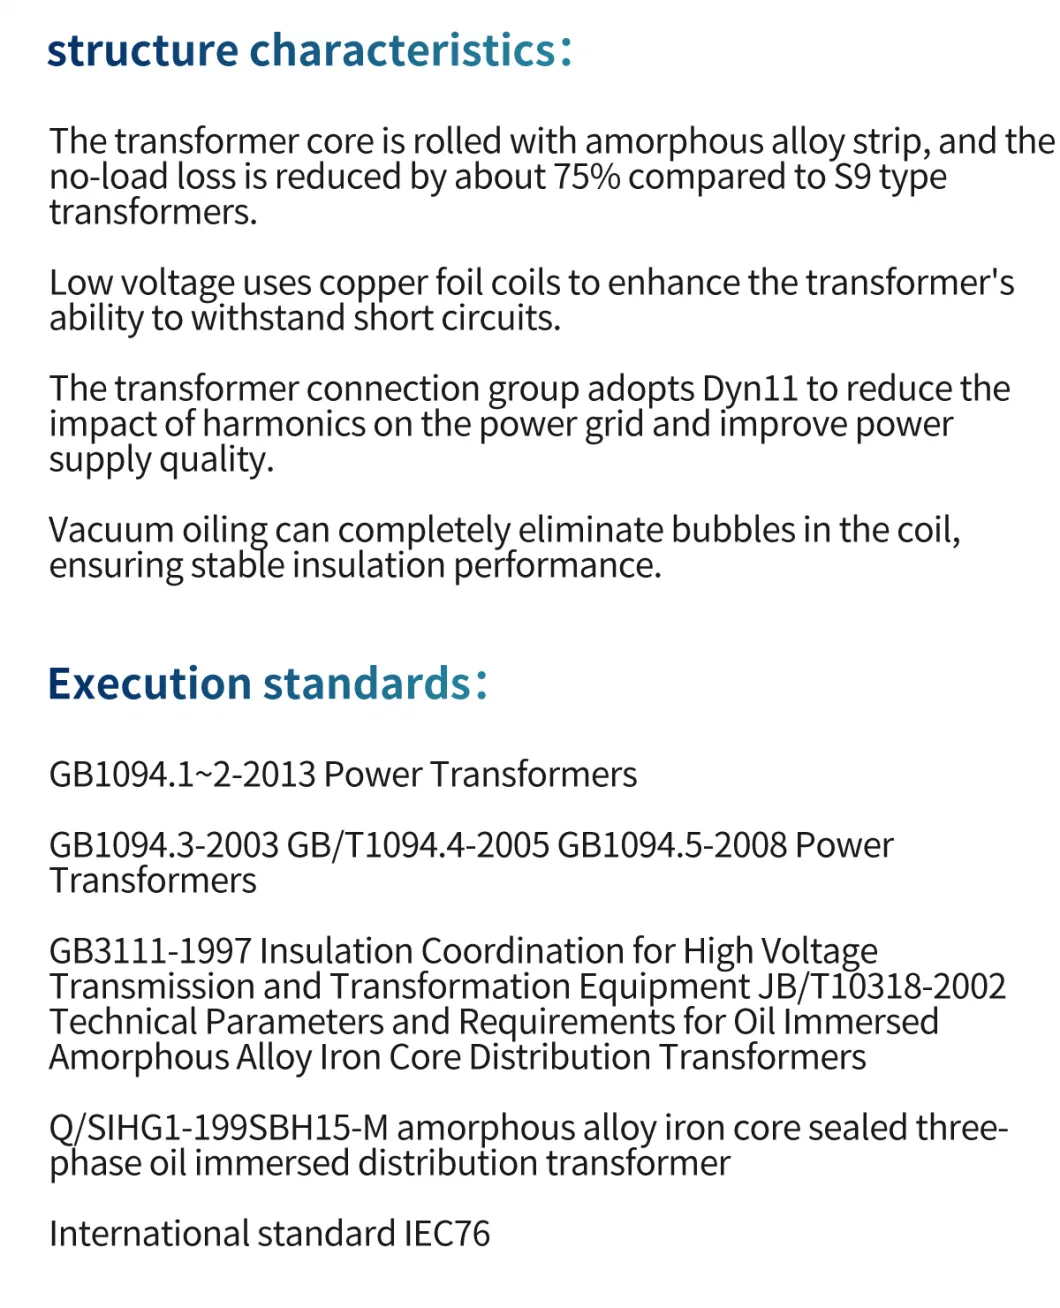 High Quality Low Price Sh15-M 11kv 22kv 33kv 35kv 5mva 5000kVA Step Down Oil Immersed Power Transformer